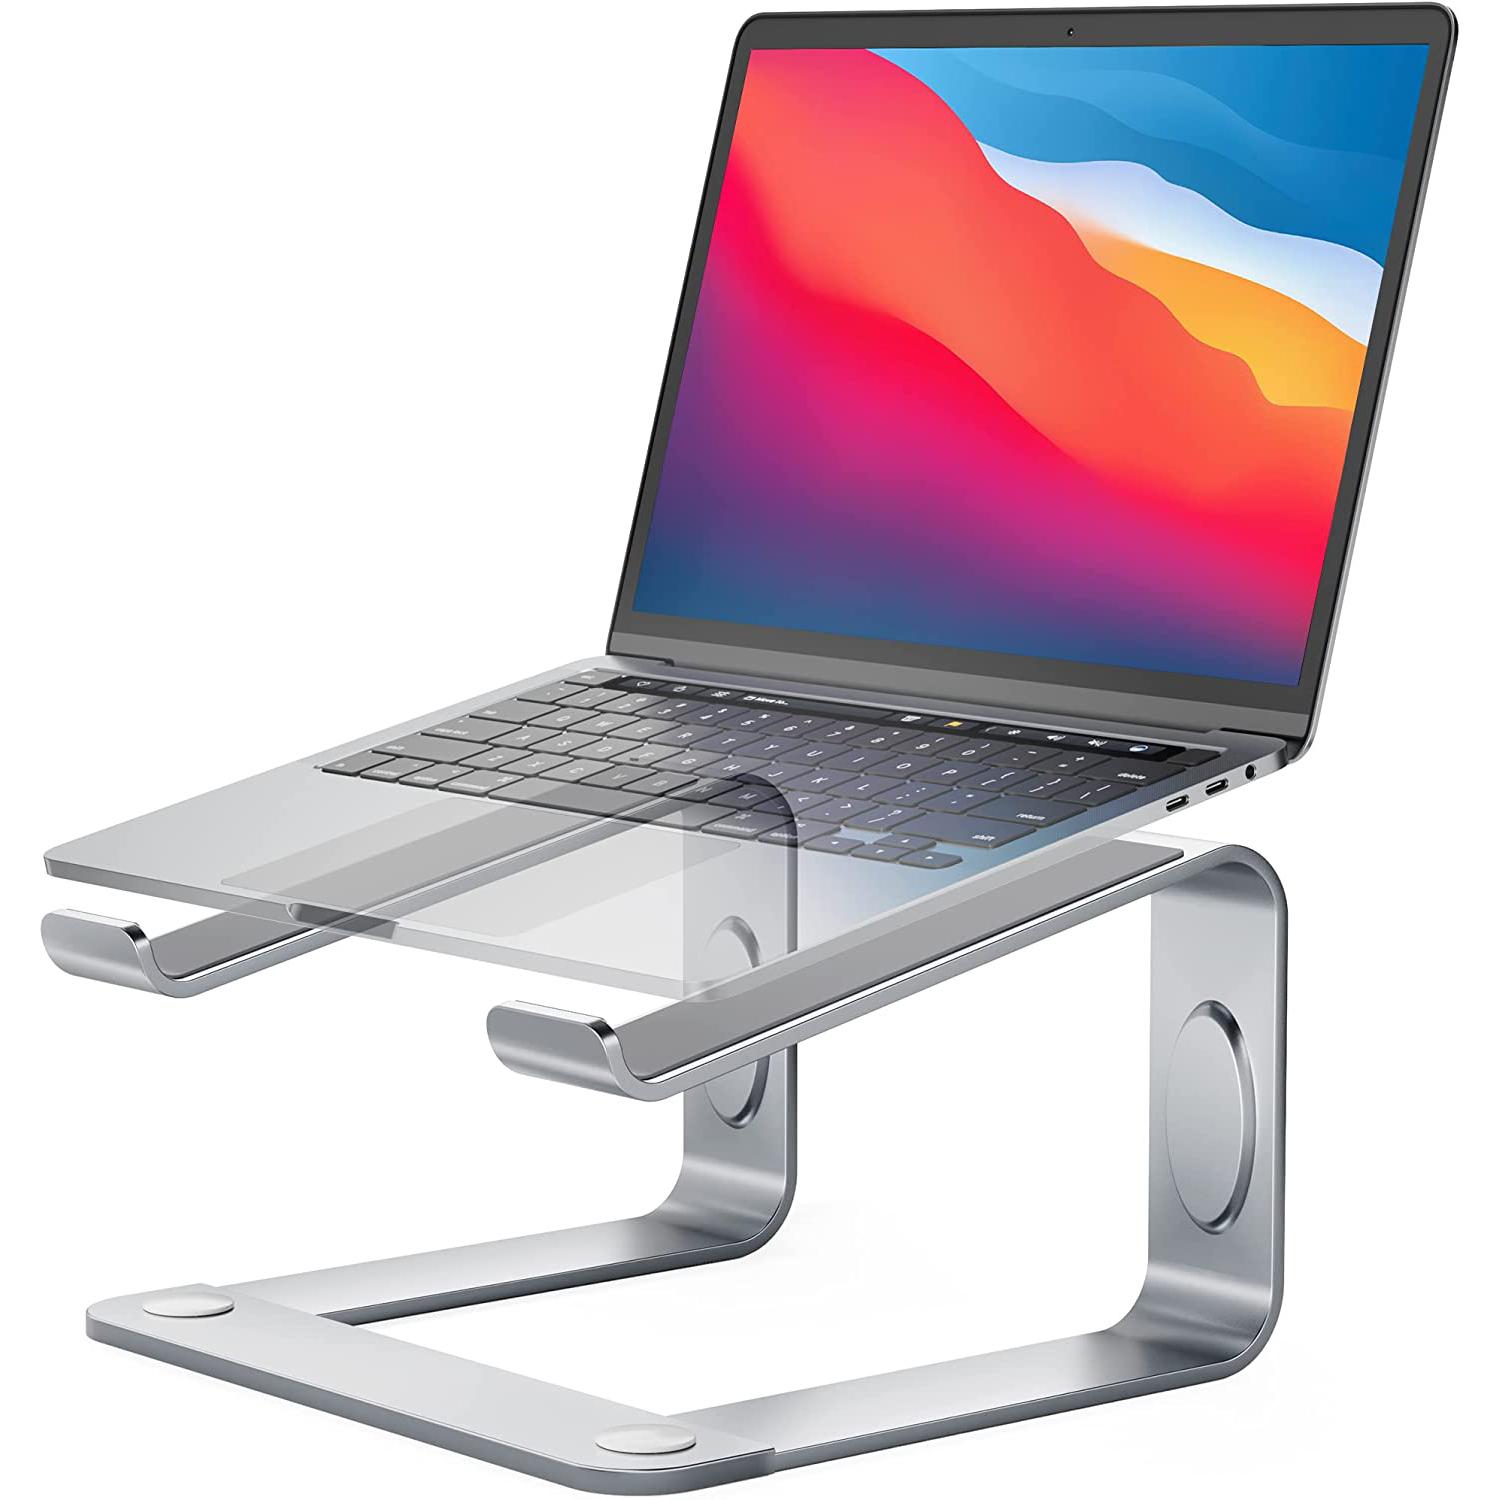 Loryergo Laptop Riser Stand for $13.99